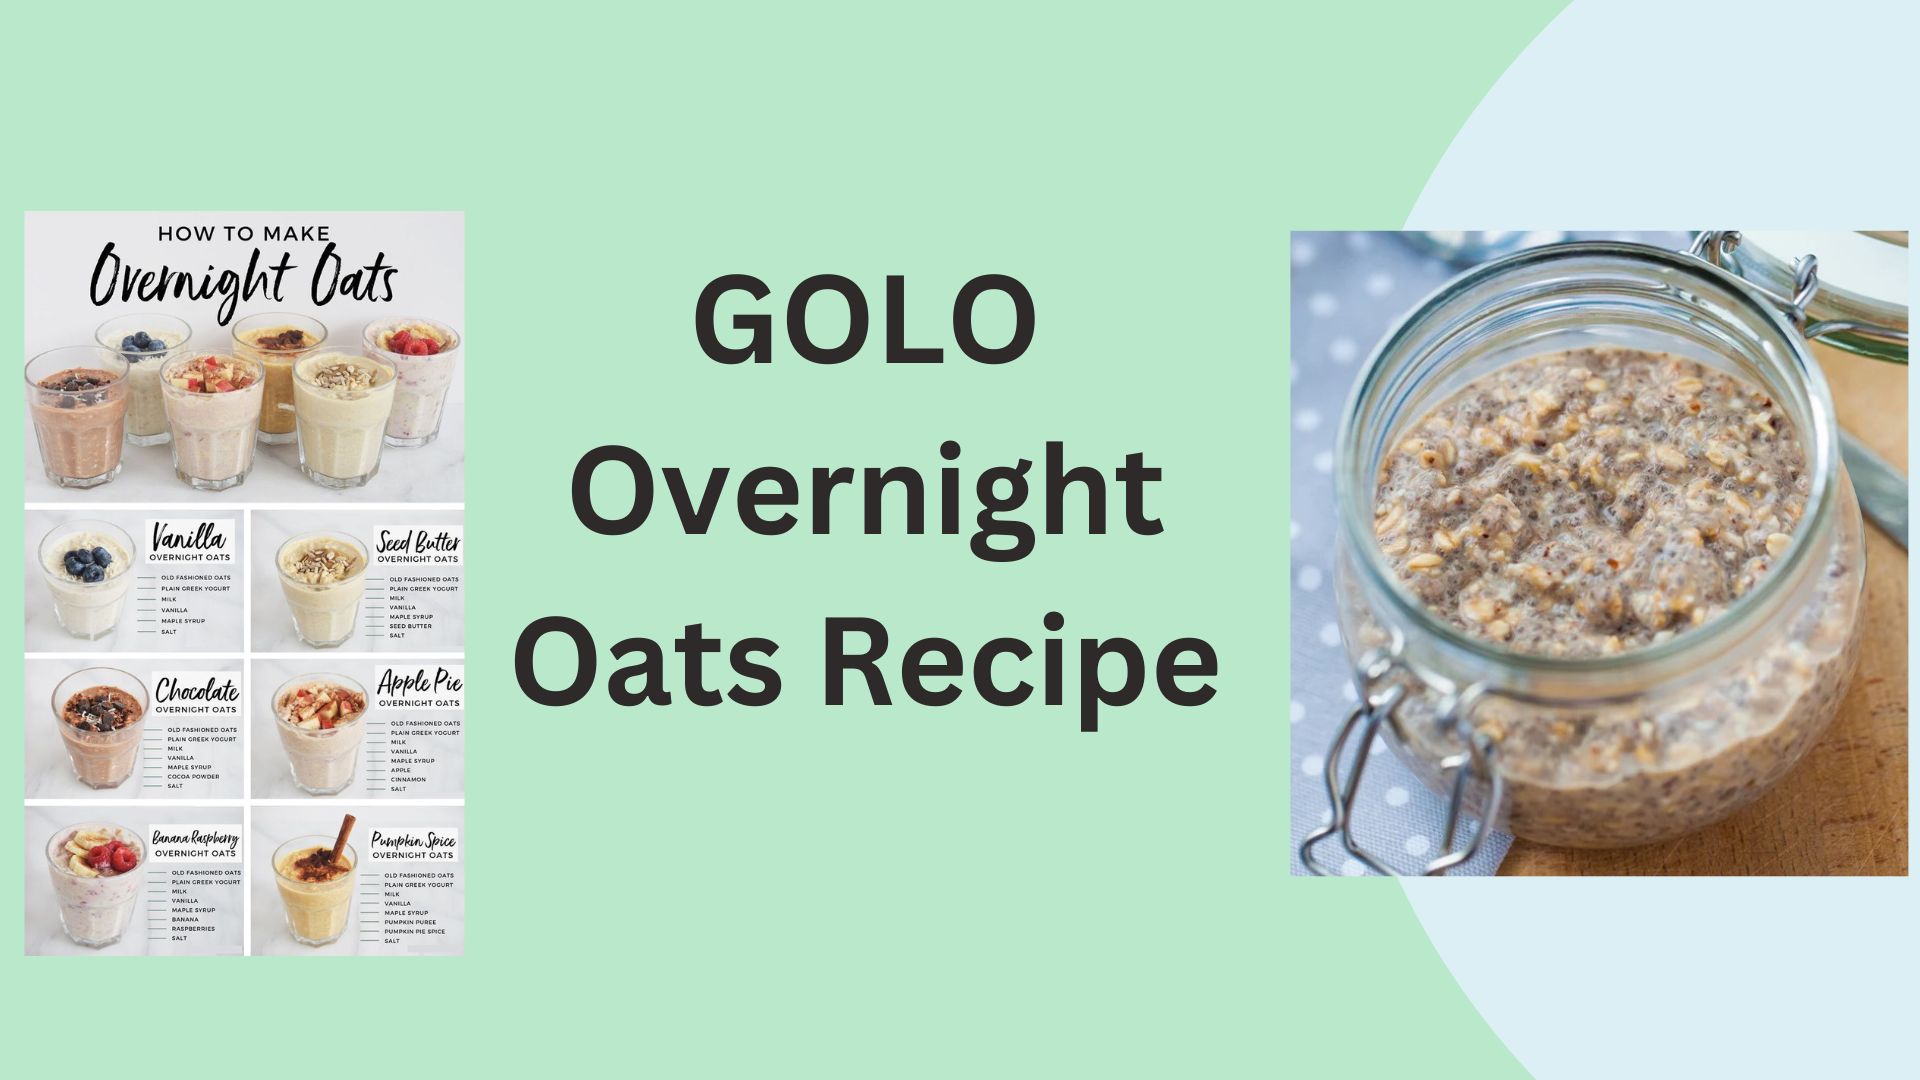 GOLO Overnight Oats Recipe